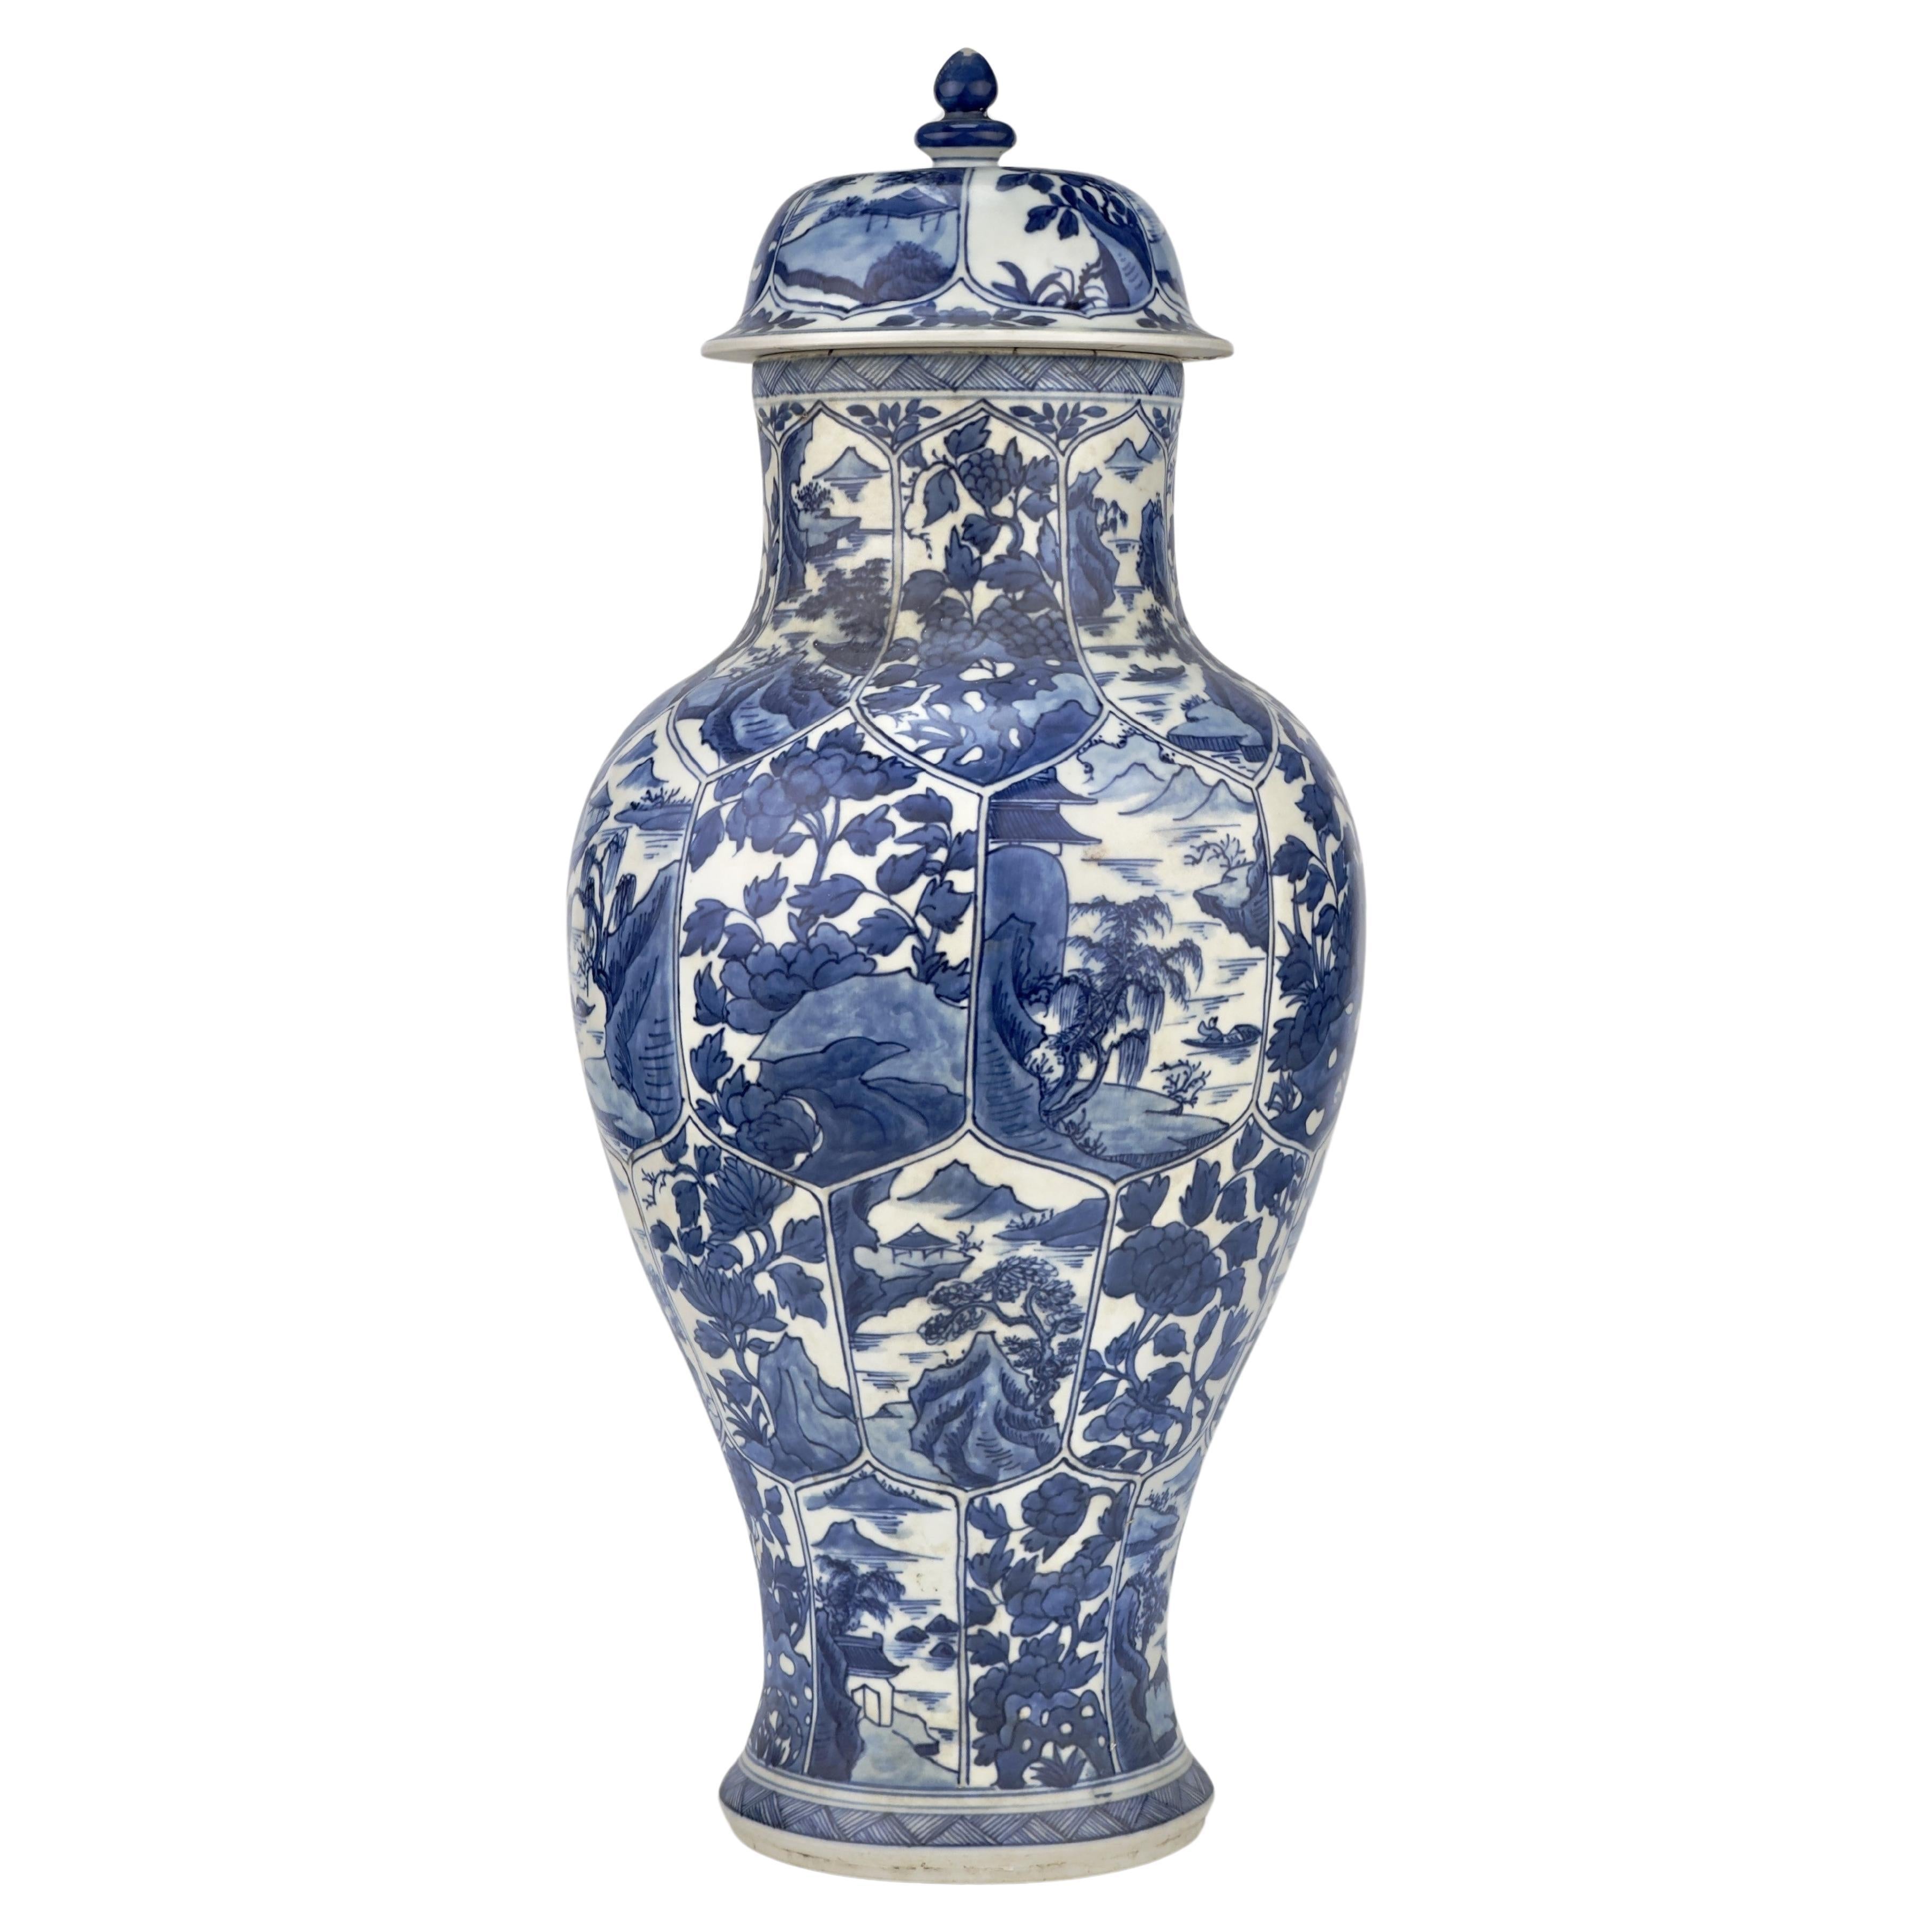 Gran jarrón de balaustre azul y blanco poco común, dinastía Qing, Kangxi, circa 1690